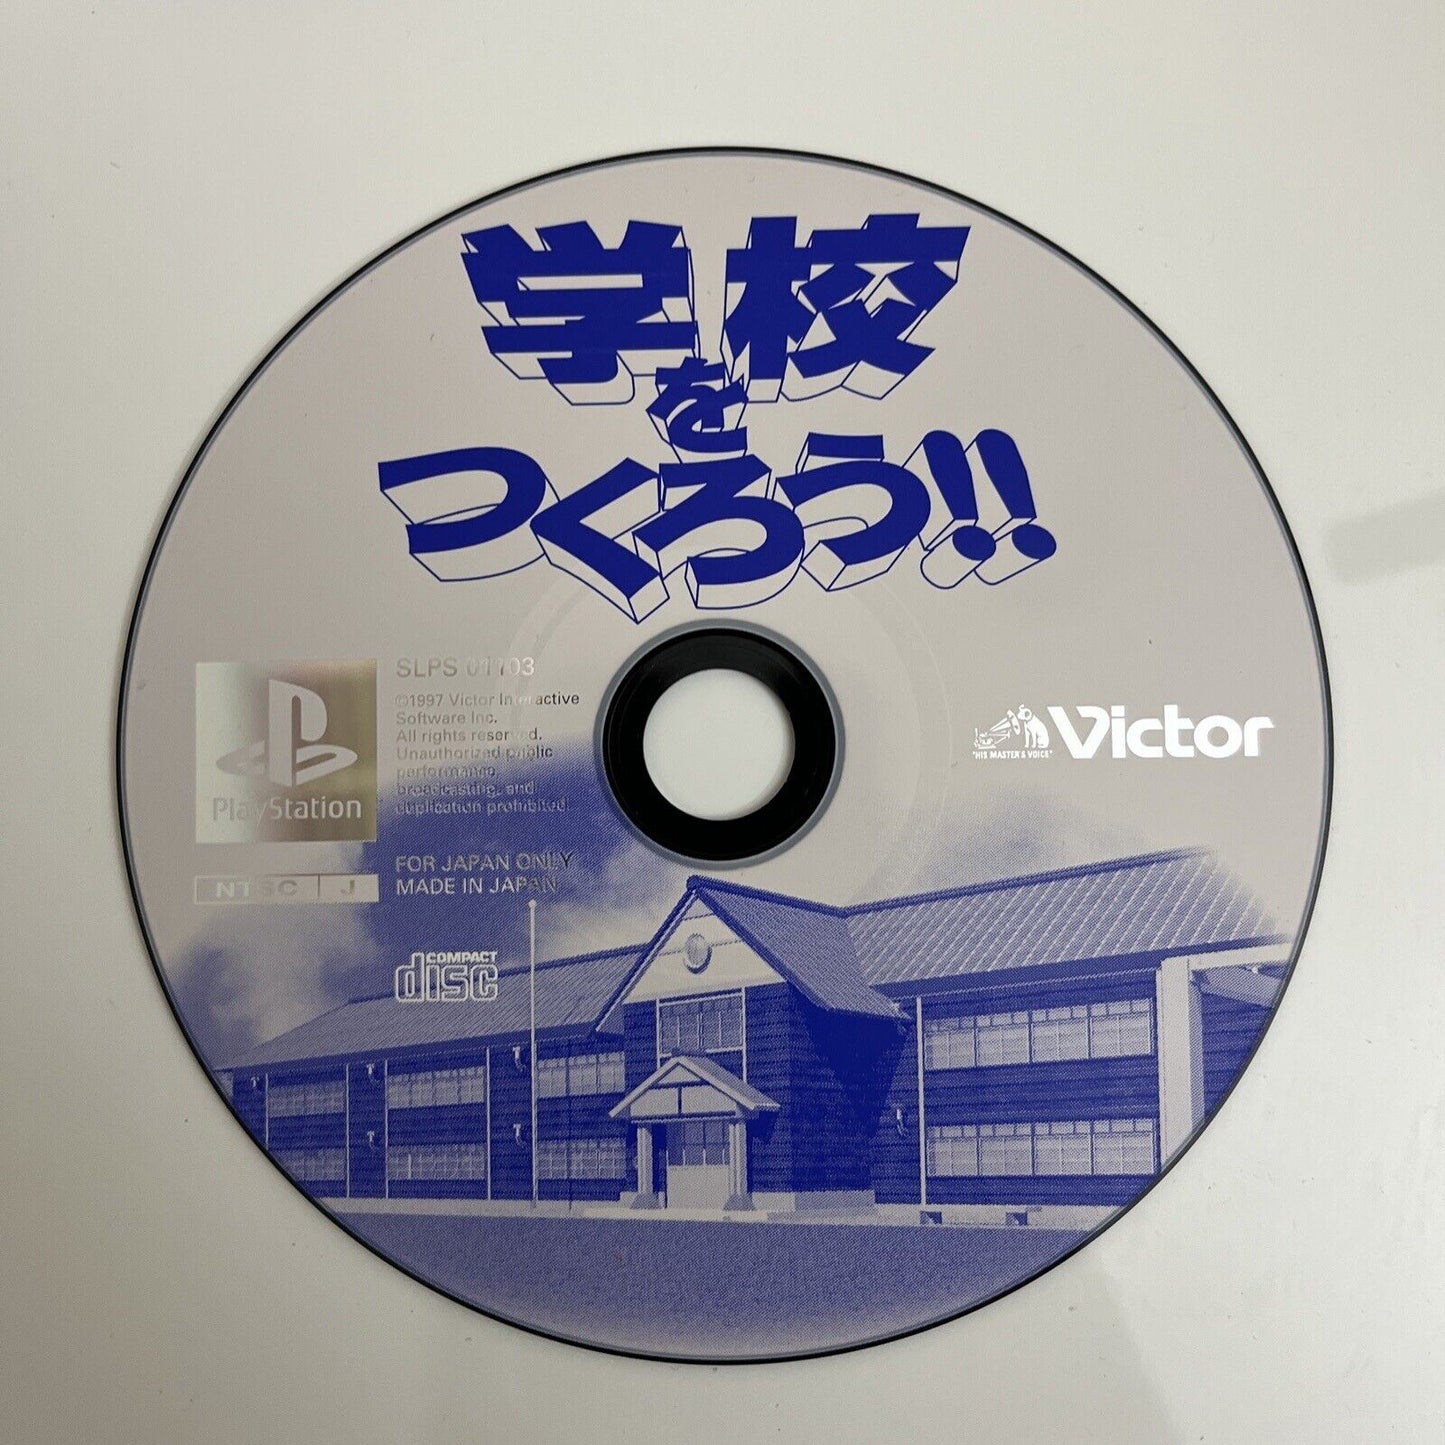 Let's Make a School - Sony PlayStation PS1 NTSC-J JAPAN Strategy Sim 1996 Game